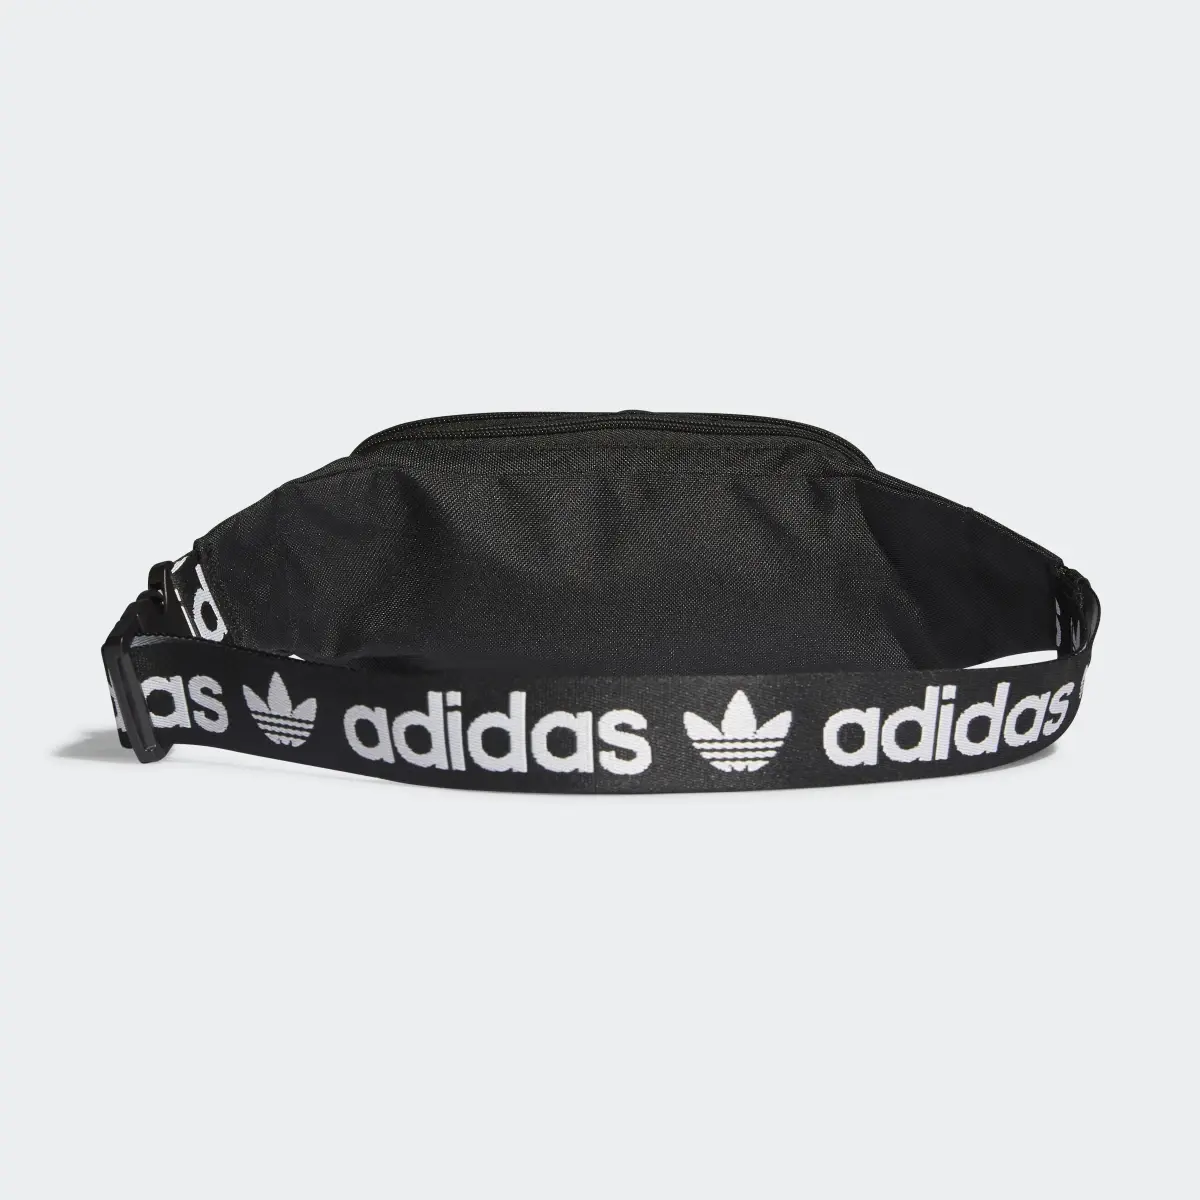 Adidas Adicolor Branded Webbing Waist Bag. 3